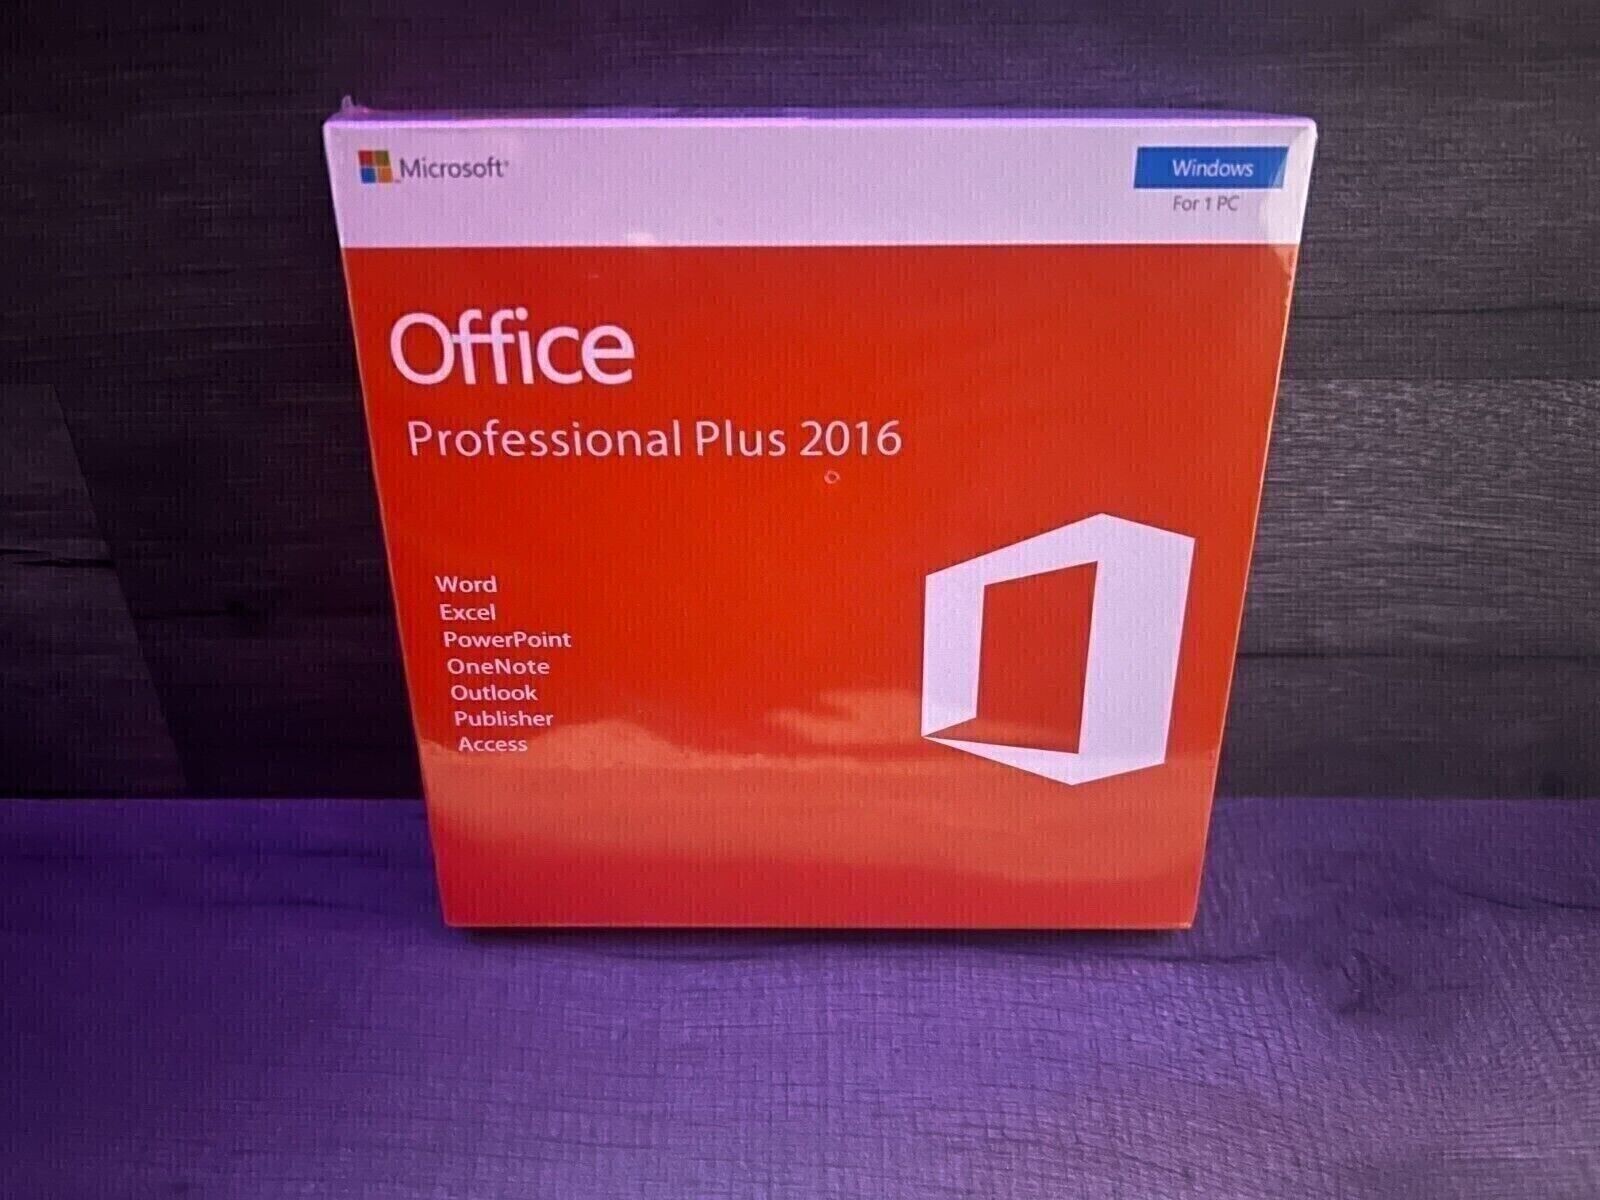 Microsoft Office Professional Plus 2016 - Lifetime - DVD - Retail Box - Sealed